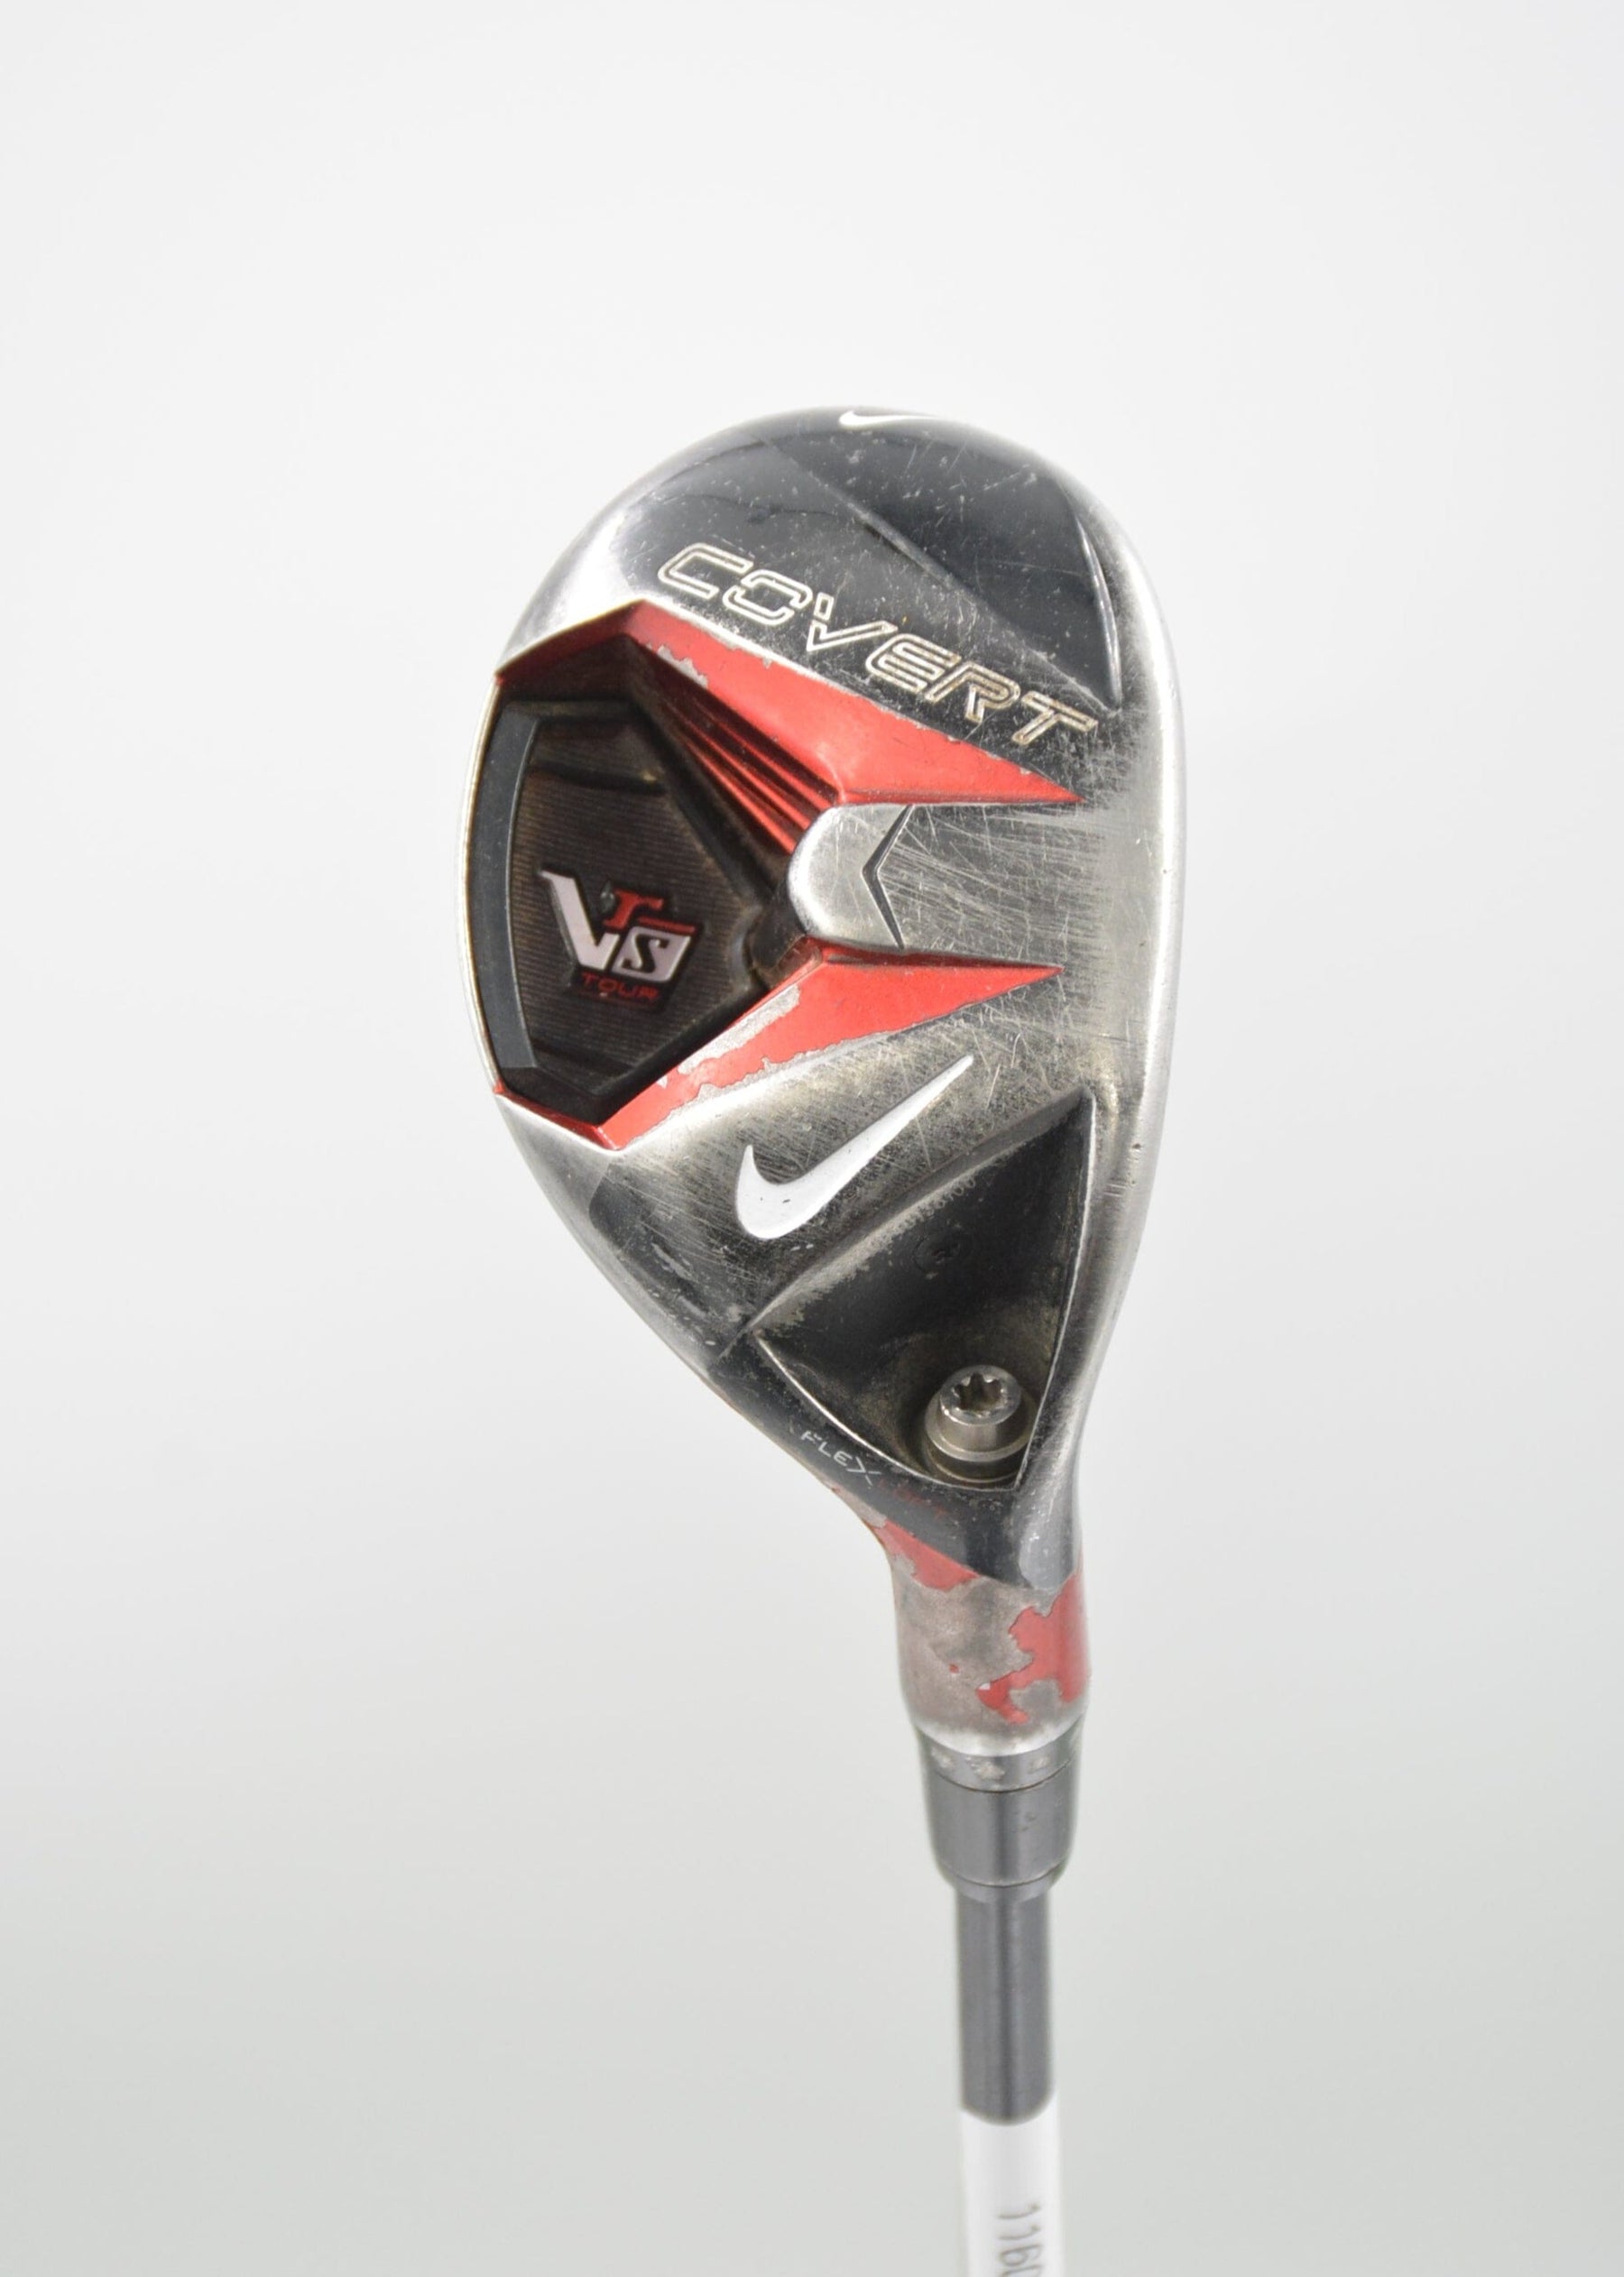 Nike Vr-S Covert Tour Hybrid R Flex Golf Clubs GolfRoots 